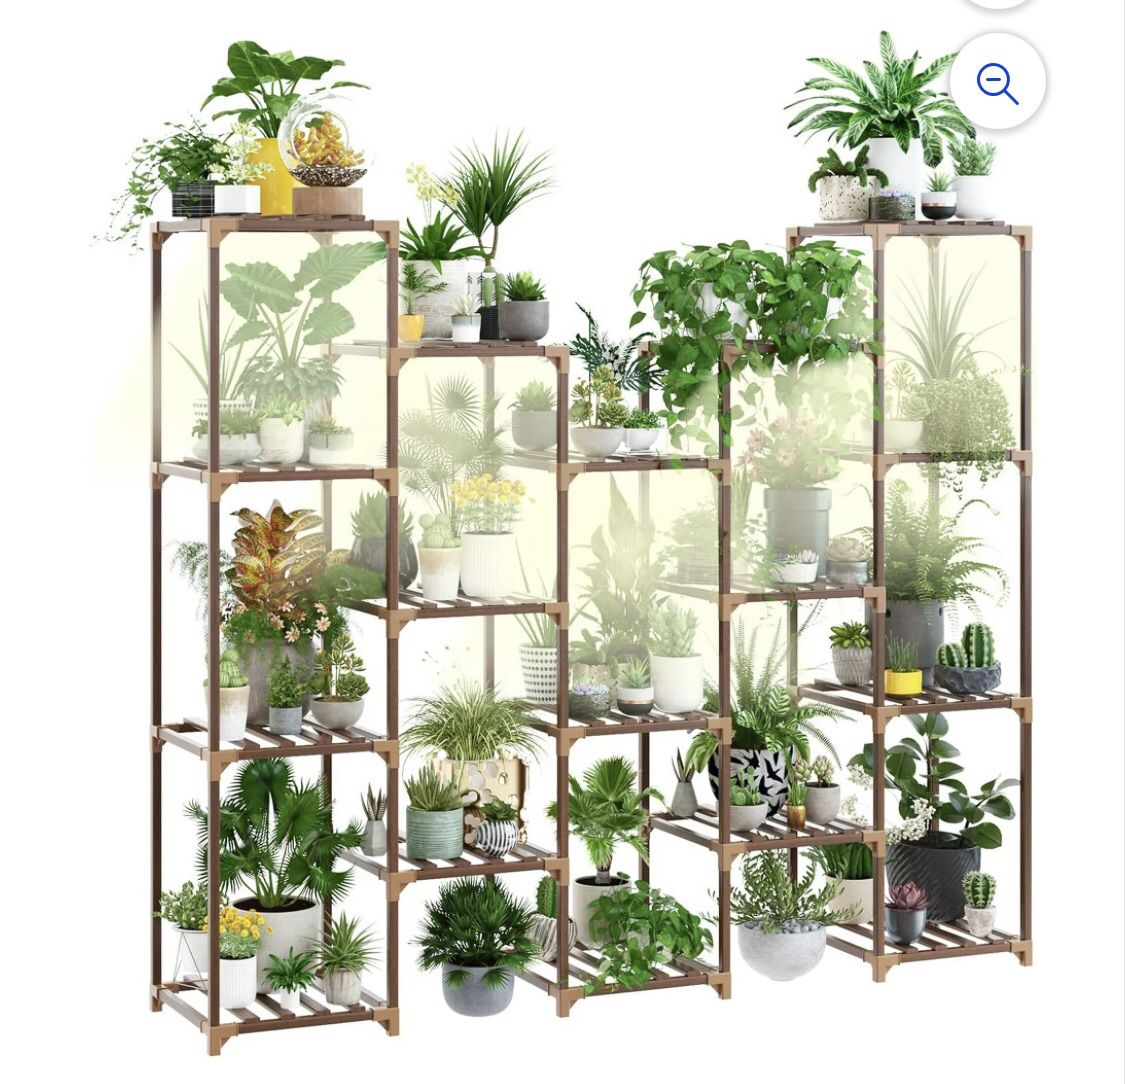 Wood Plant Stand With Grow Lights Indoor Plants Outdoor Corner Plant Shelf Flower Stands For Living Room Balcony Garden